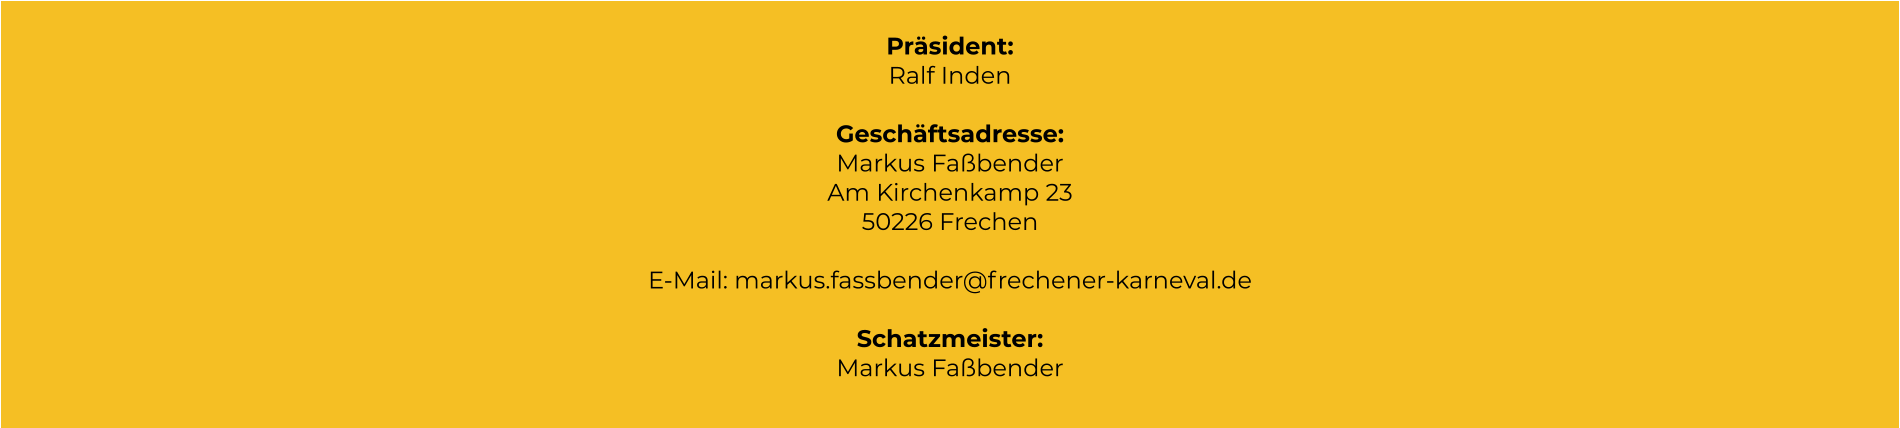 Präsident: Ralf Inden  Geschäftsadresse: Markus Faßbender Am Kirchenkamp 23 50226 Frechen  E-Mail: markus.fassbender@frechener-karneval.de  Schatzmeister: Markus Faßbender